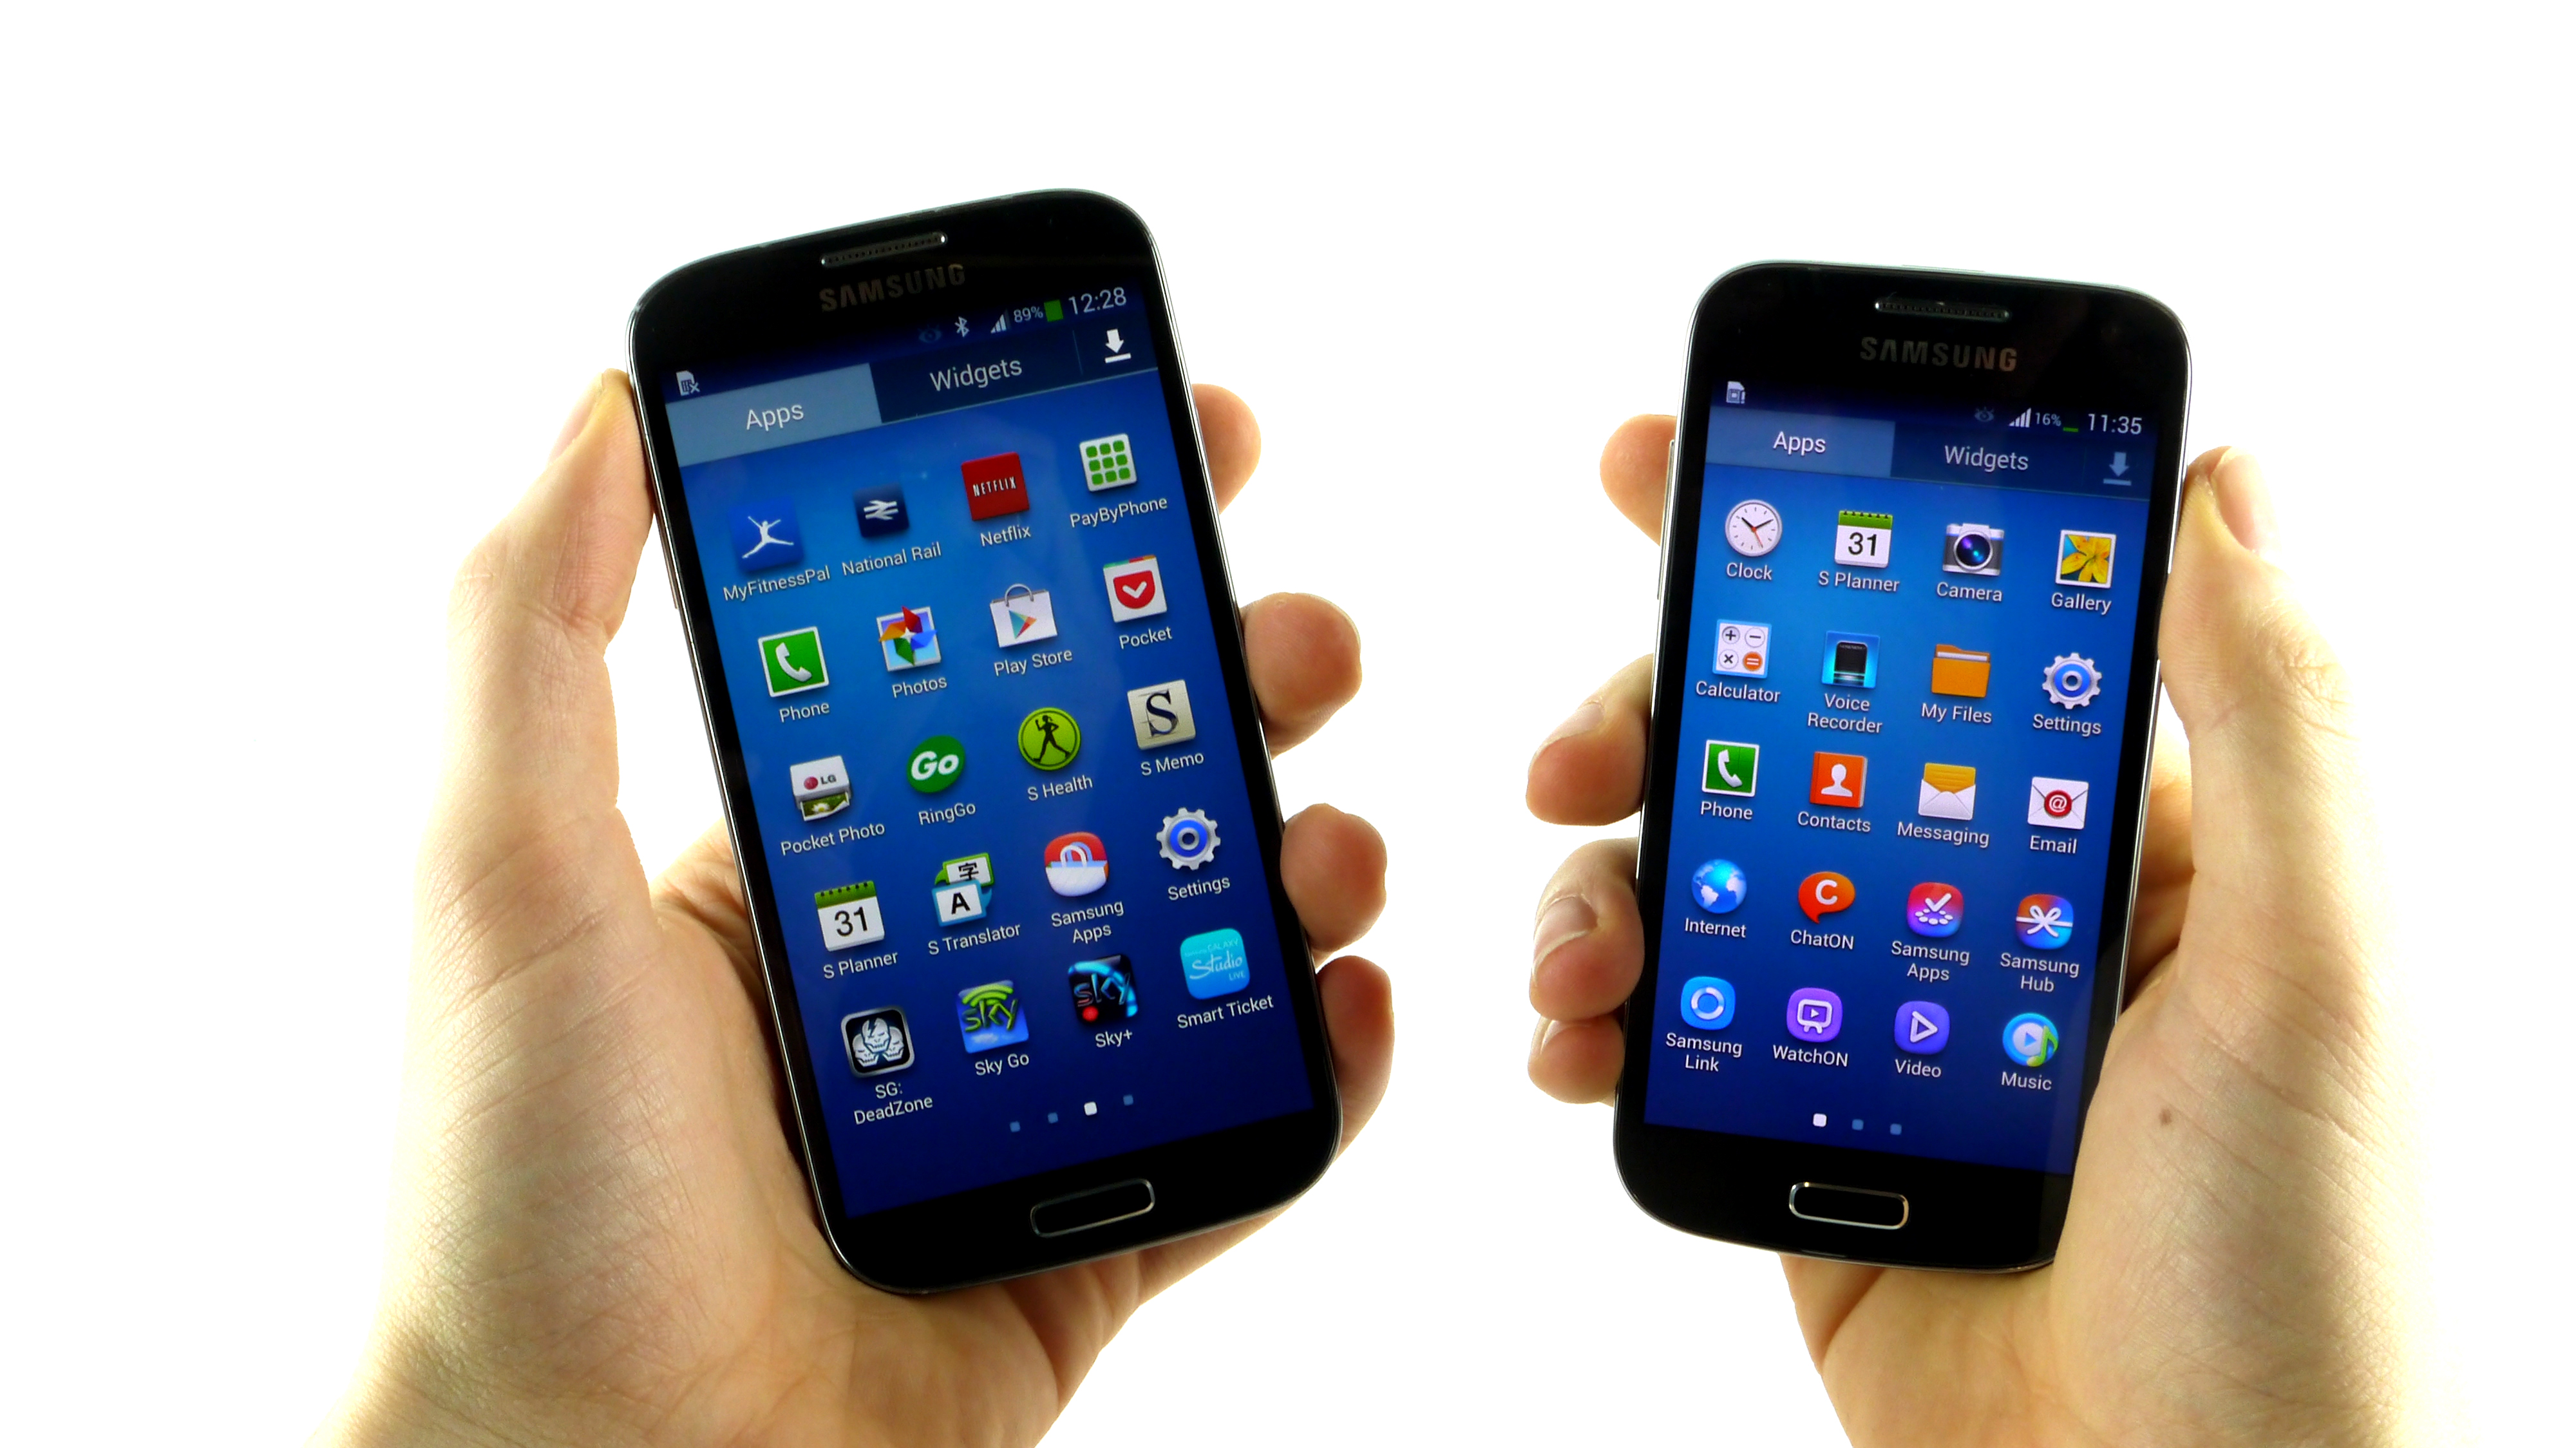 Samsung Galaxy S4 and Galaxy S4 mini